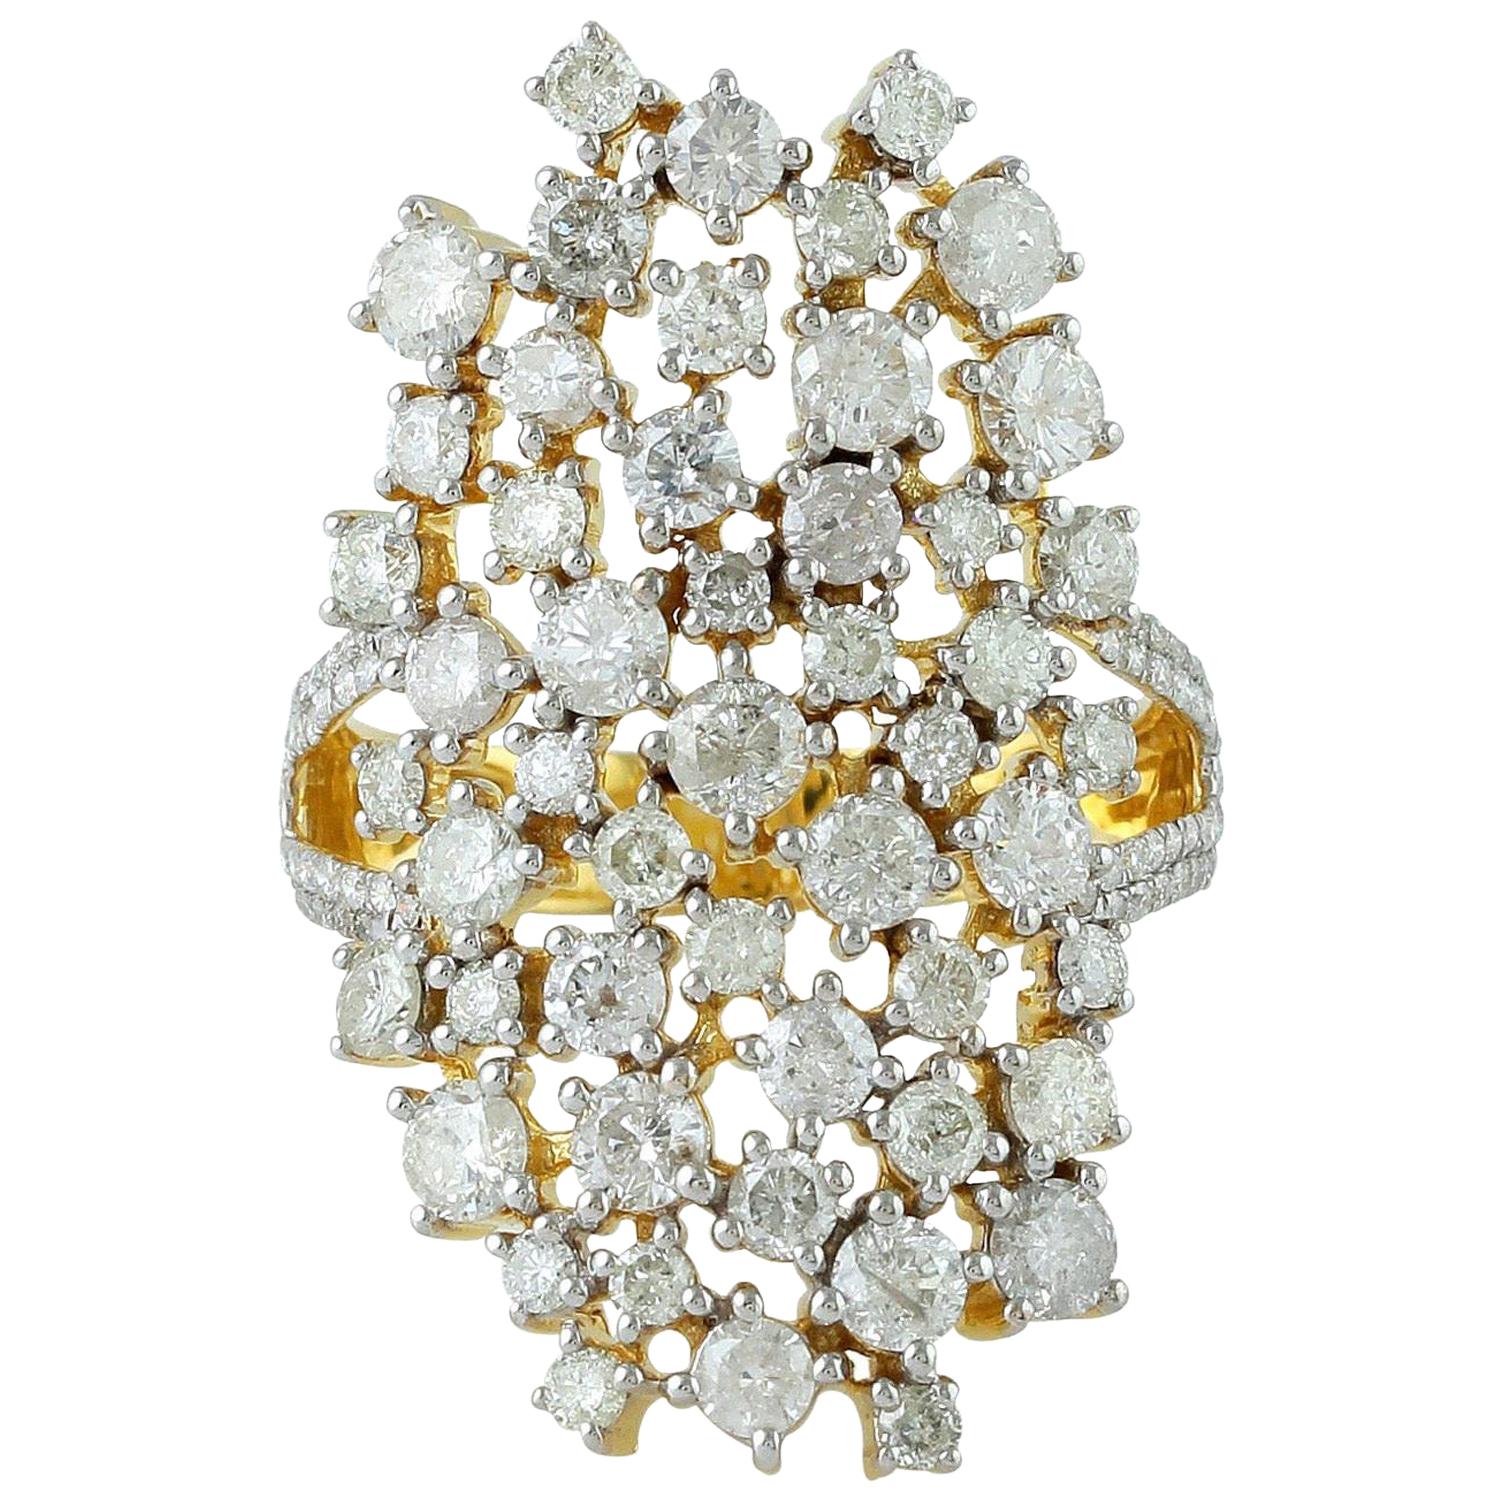 Bague de fiançailles en or 14 carats avec grappe de diamants de 3,58 carats